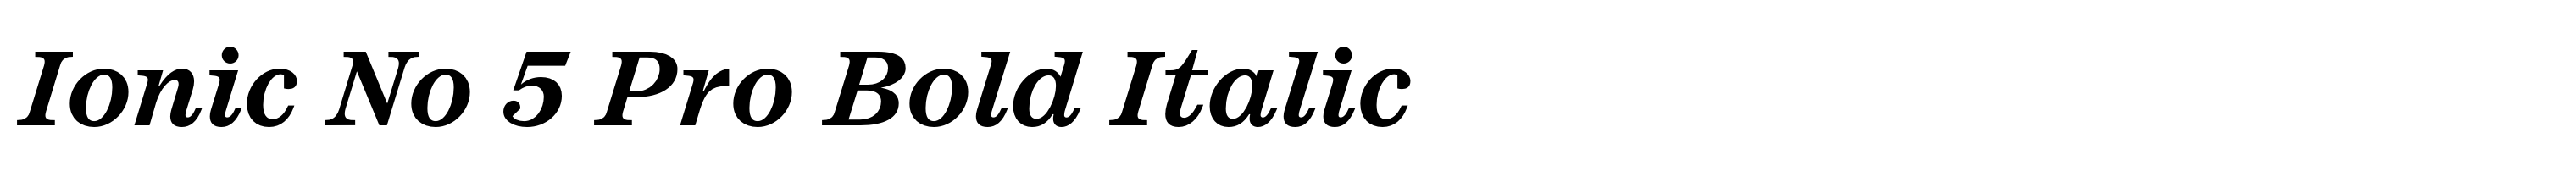 Ionic No 5 Pro Bold Italic